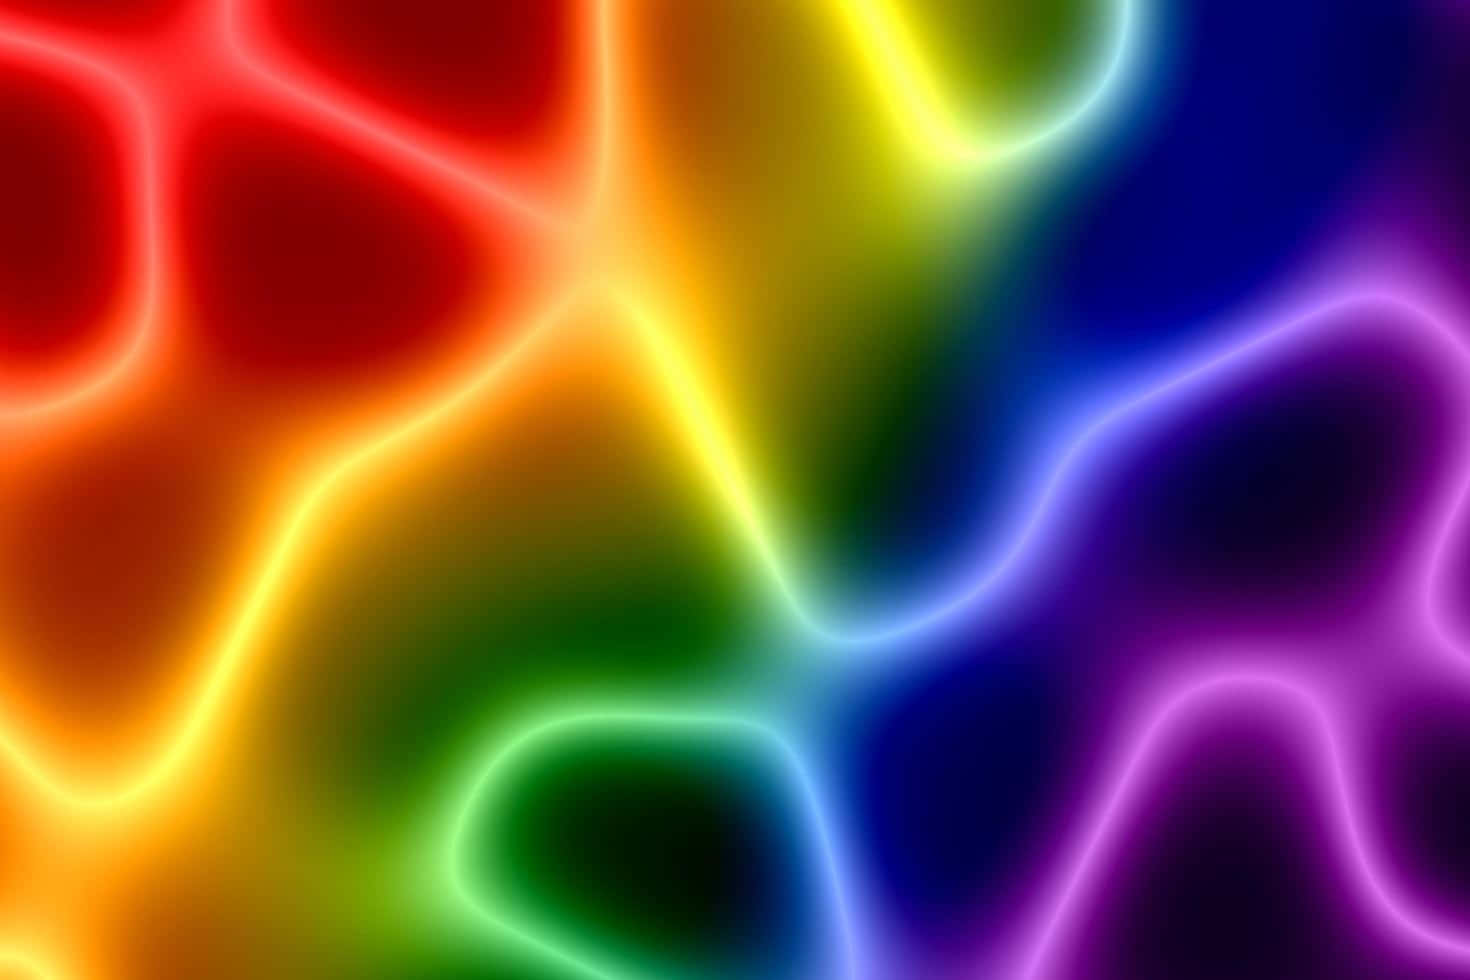 Vibrant Neon Rainbow Waves.jpg Wallpaper